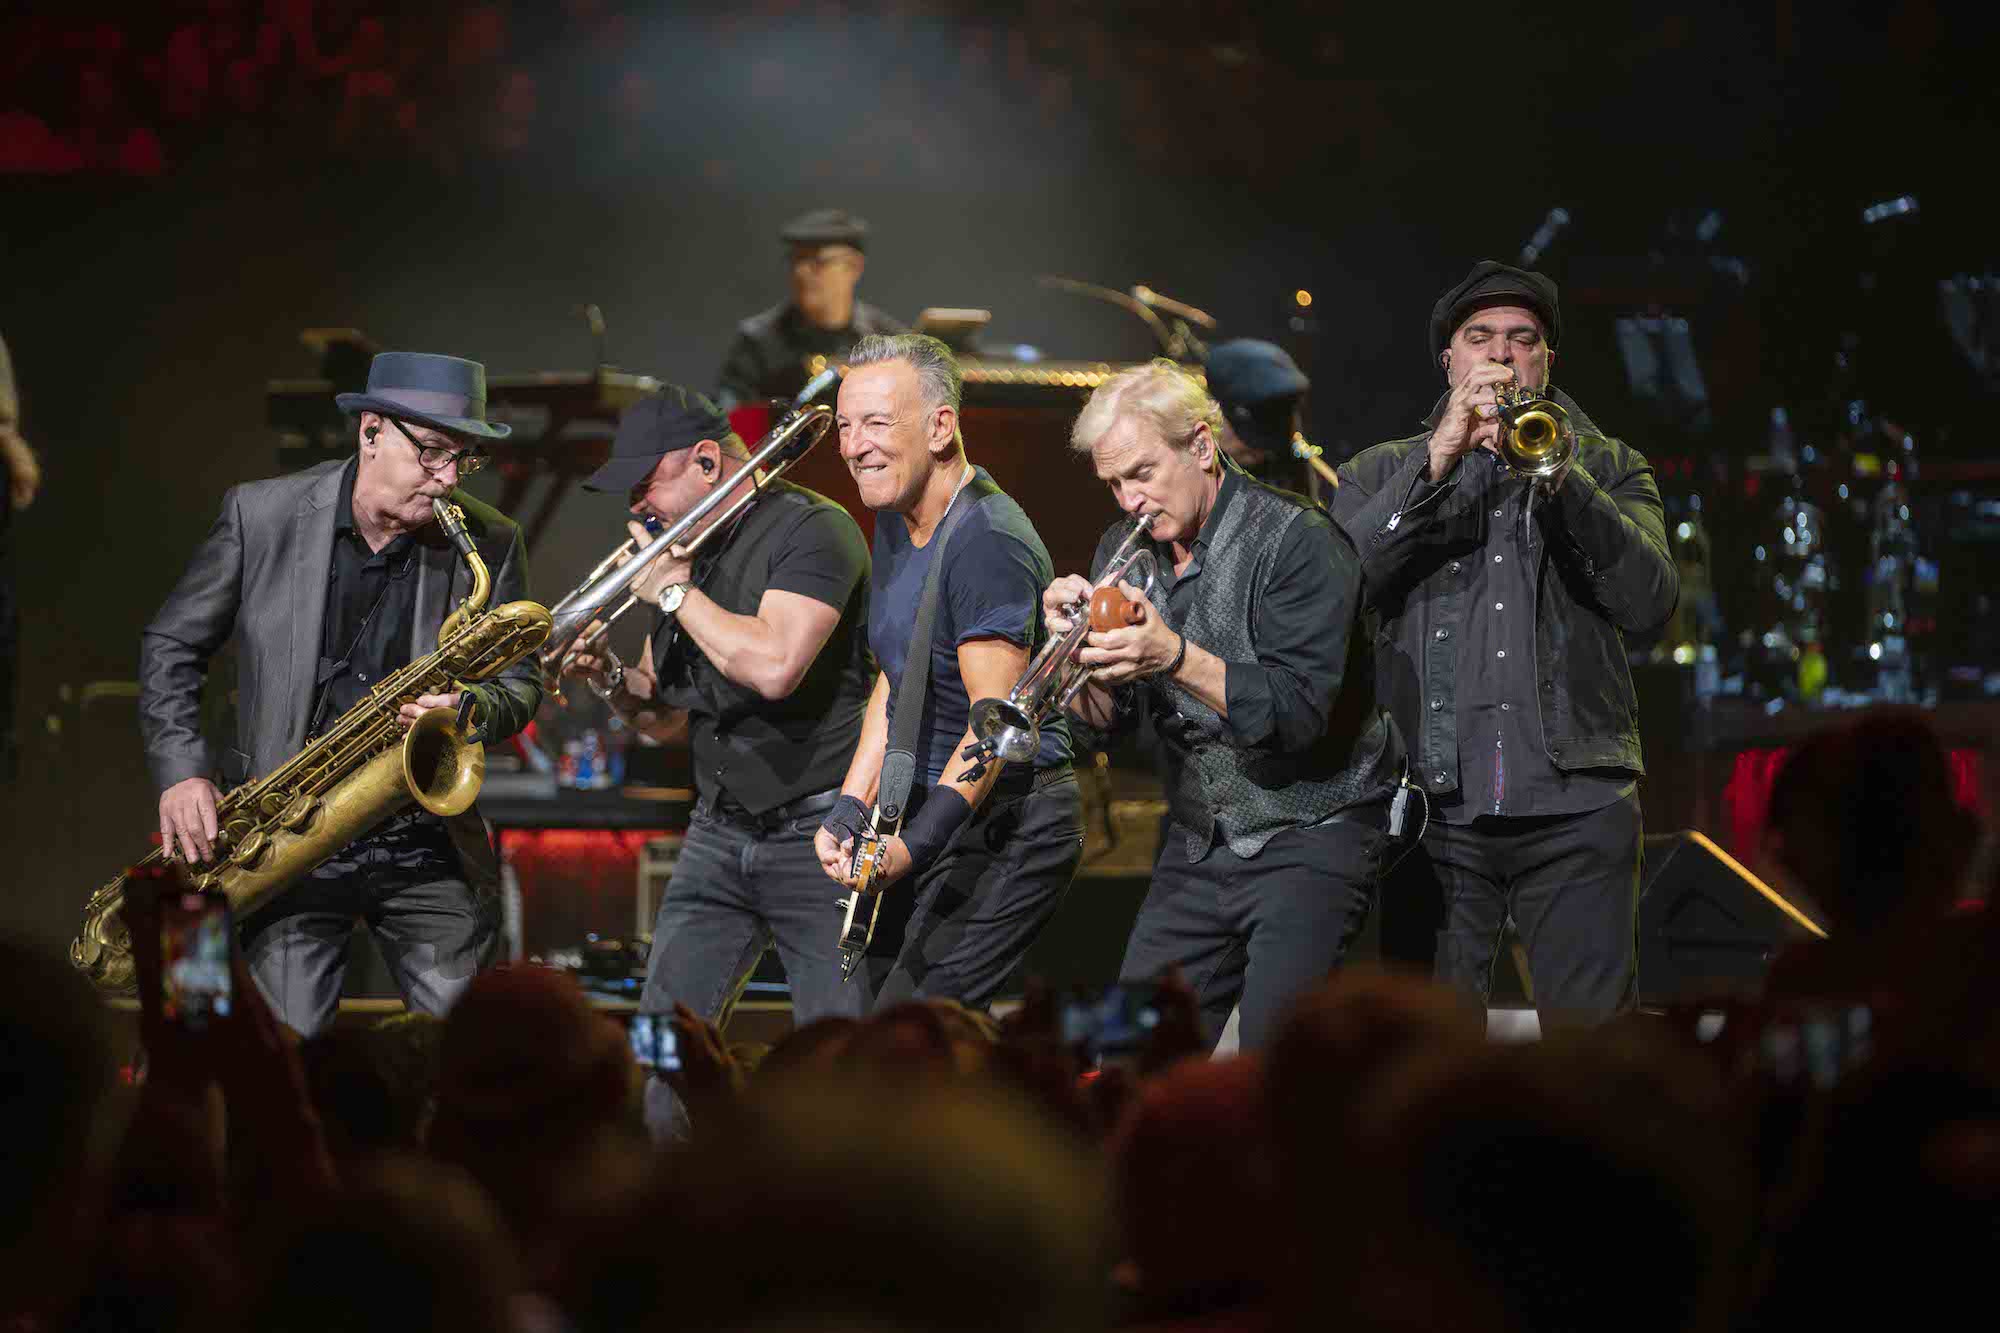 Bruce Springsteen & E Street Band at Moody Center, Austin, Texas on February 16, 2023.